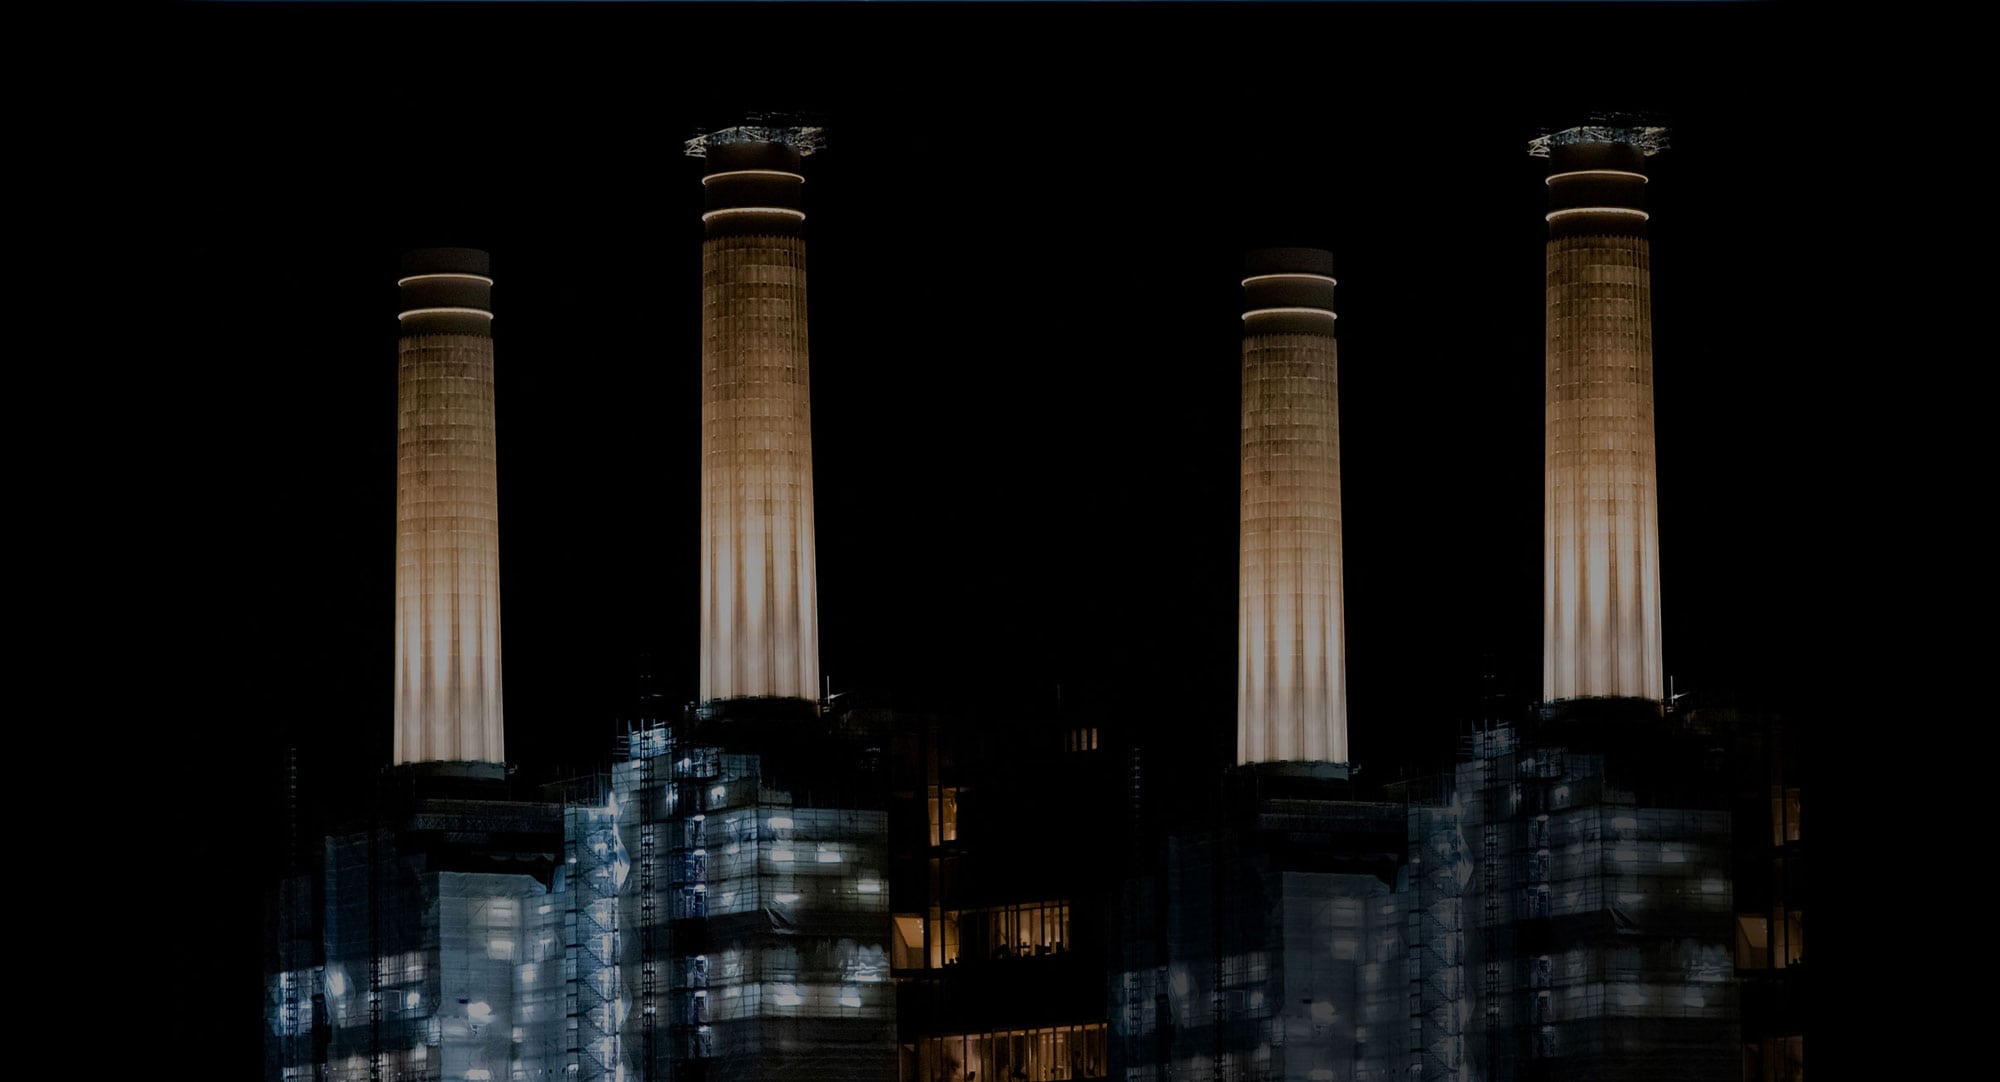 Battersea Power Station at night